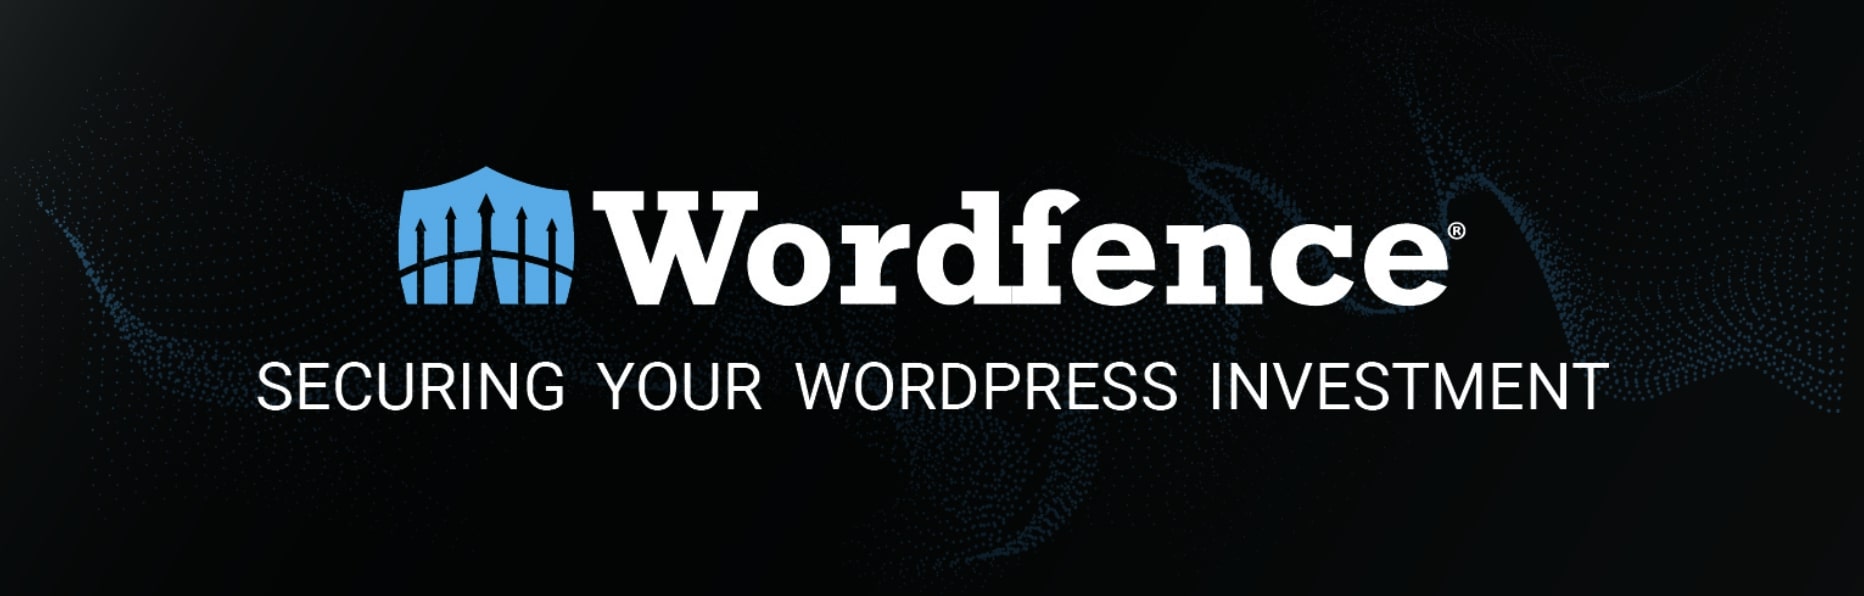 Daftar 15 Plugin Wordpress Wajib Ada di Blog untuk SEO (Edisi 2019) 11